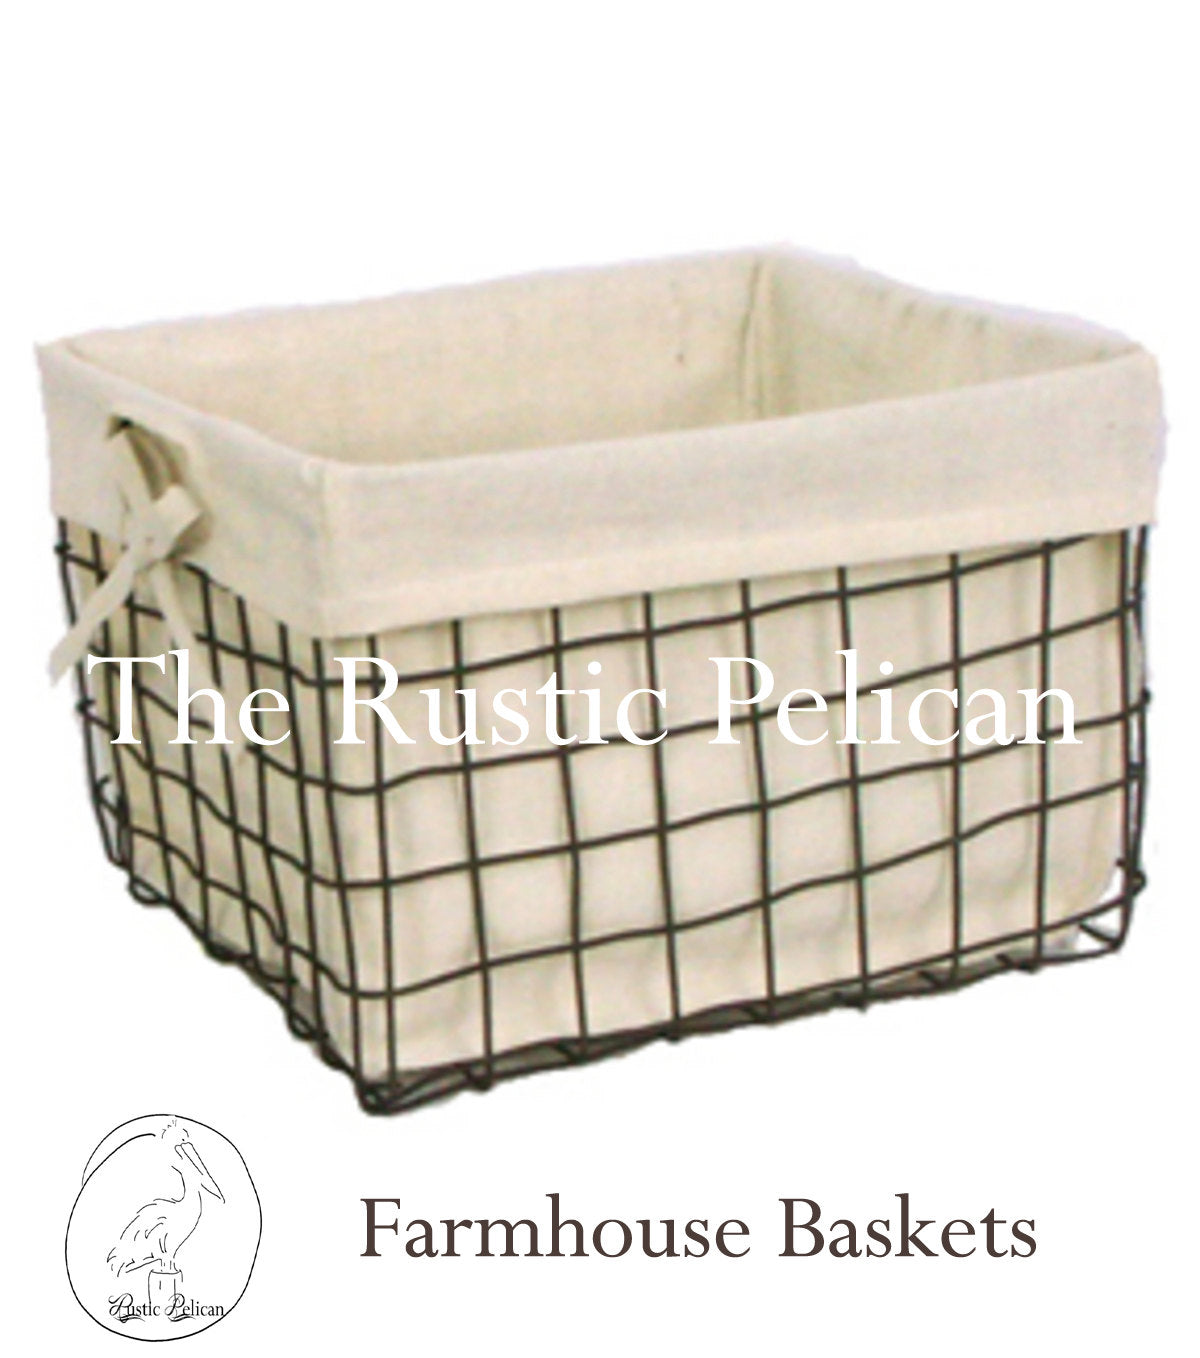 Bathroom Baskets